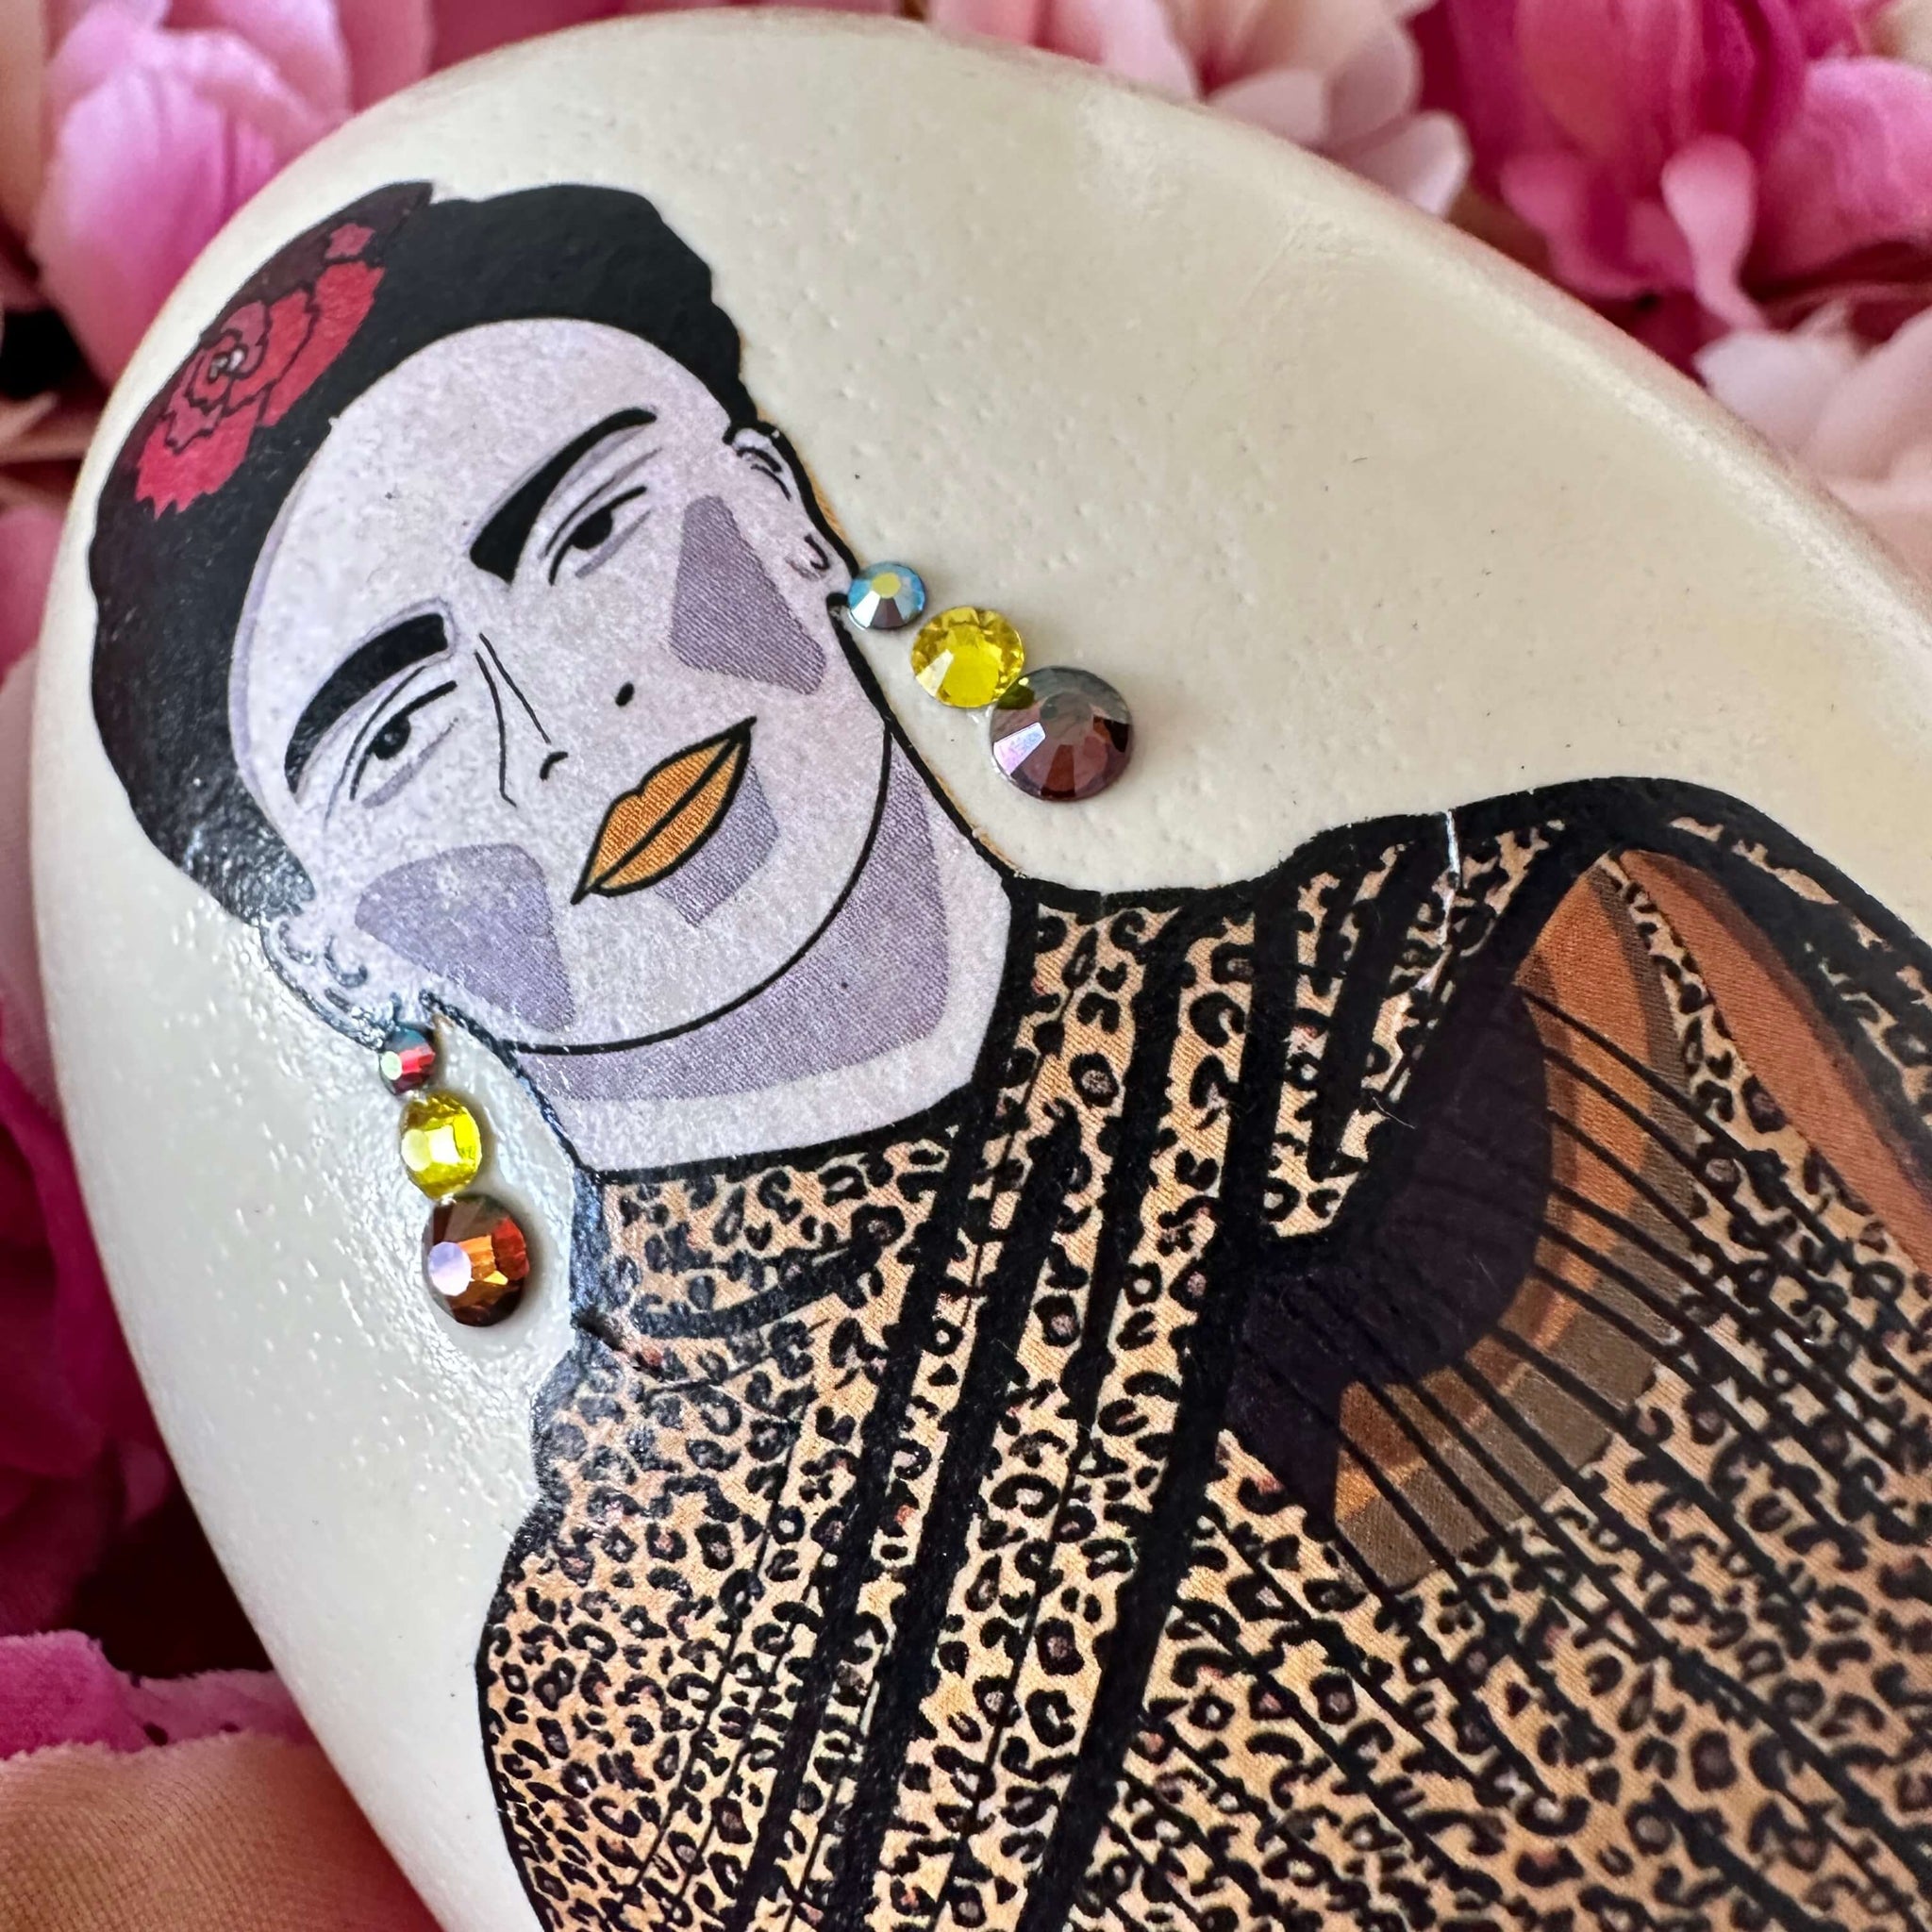 Ei-nzigartig Straußenei Frida Kahlo 